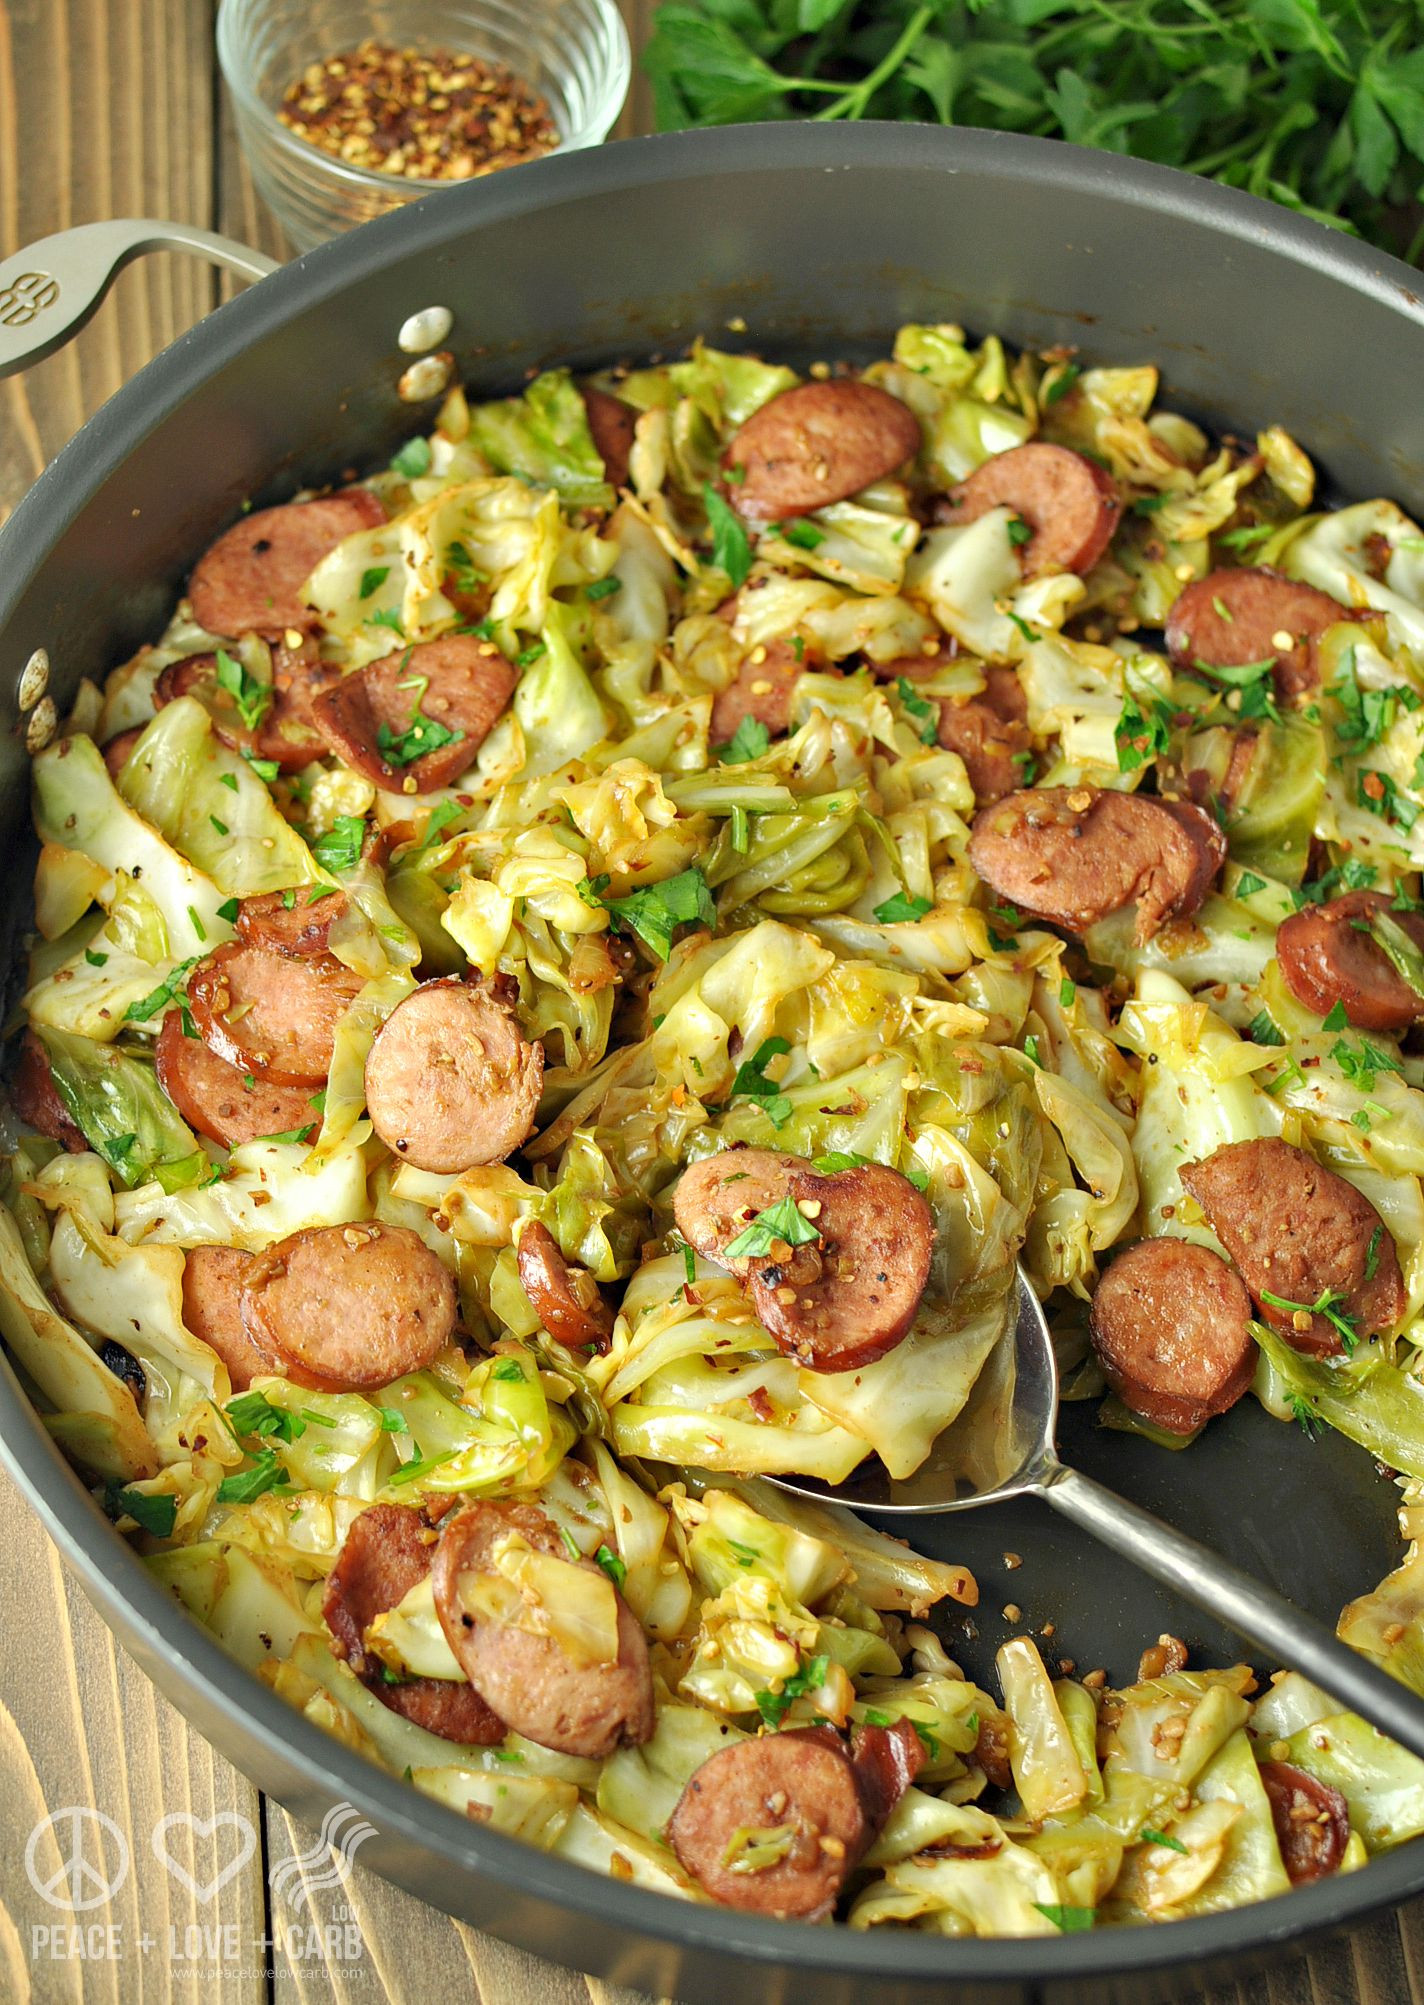 Low Carb Smoked Sausage Recipes
 recipes using smoked sausage and cabbage